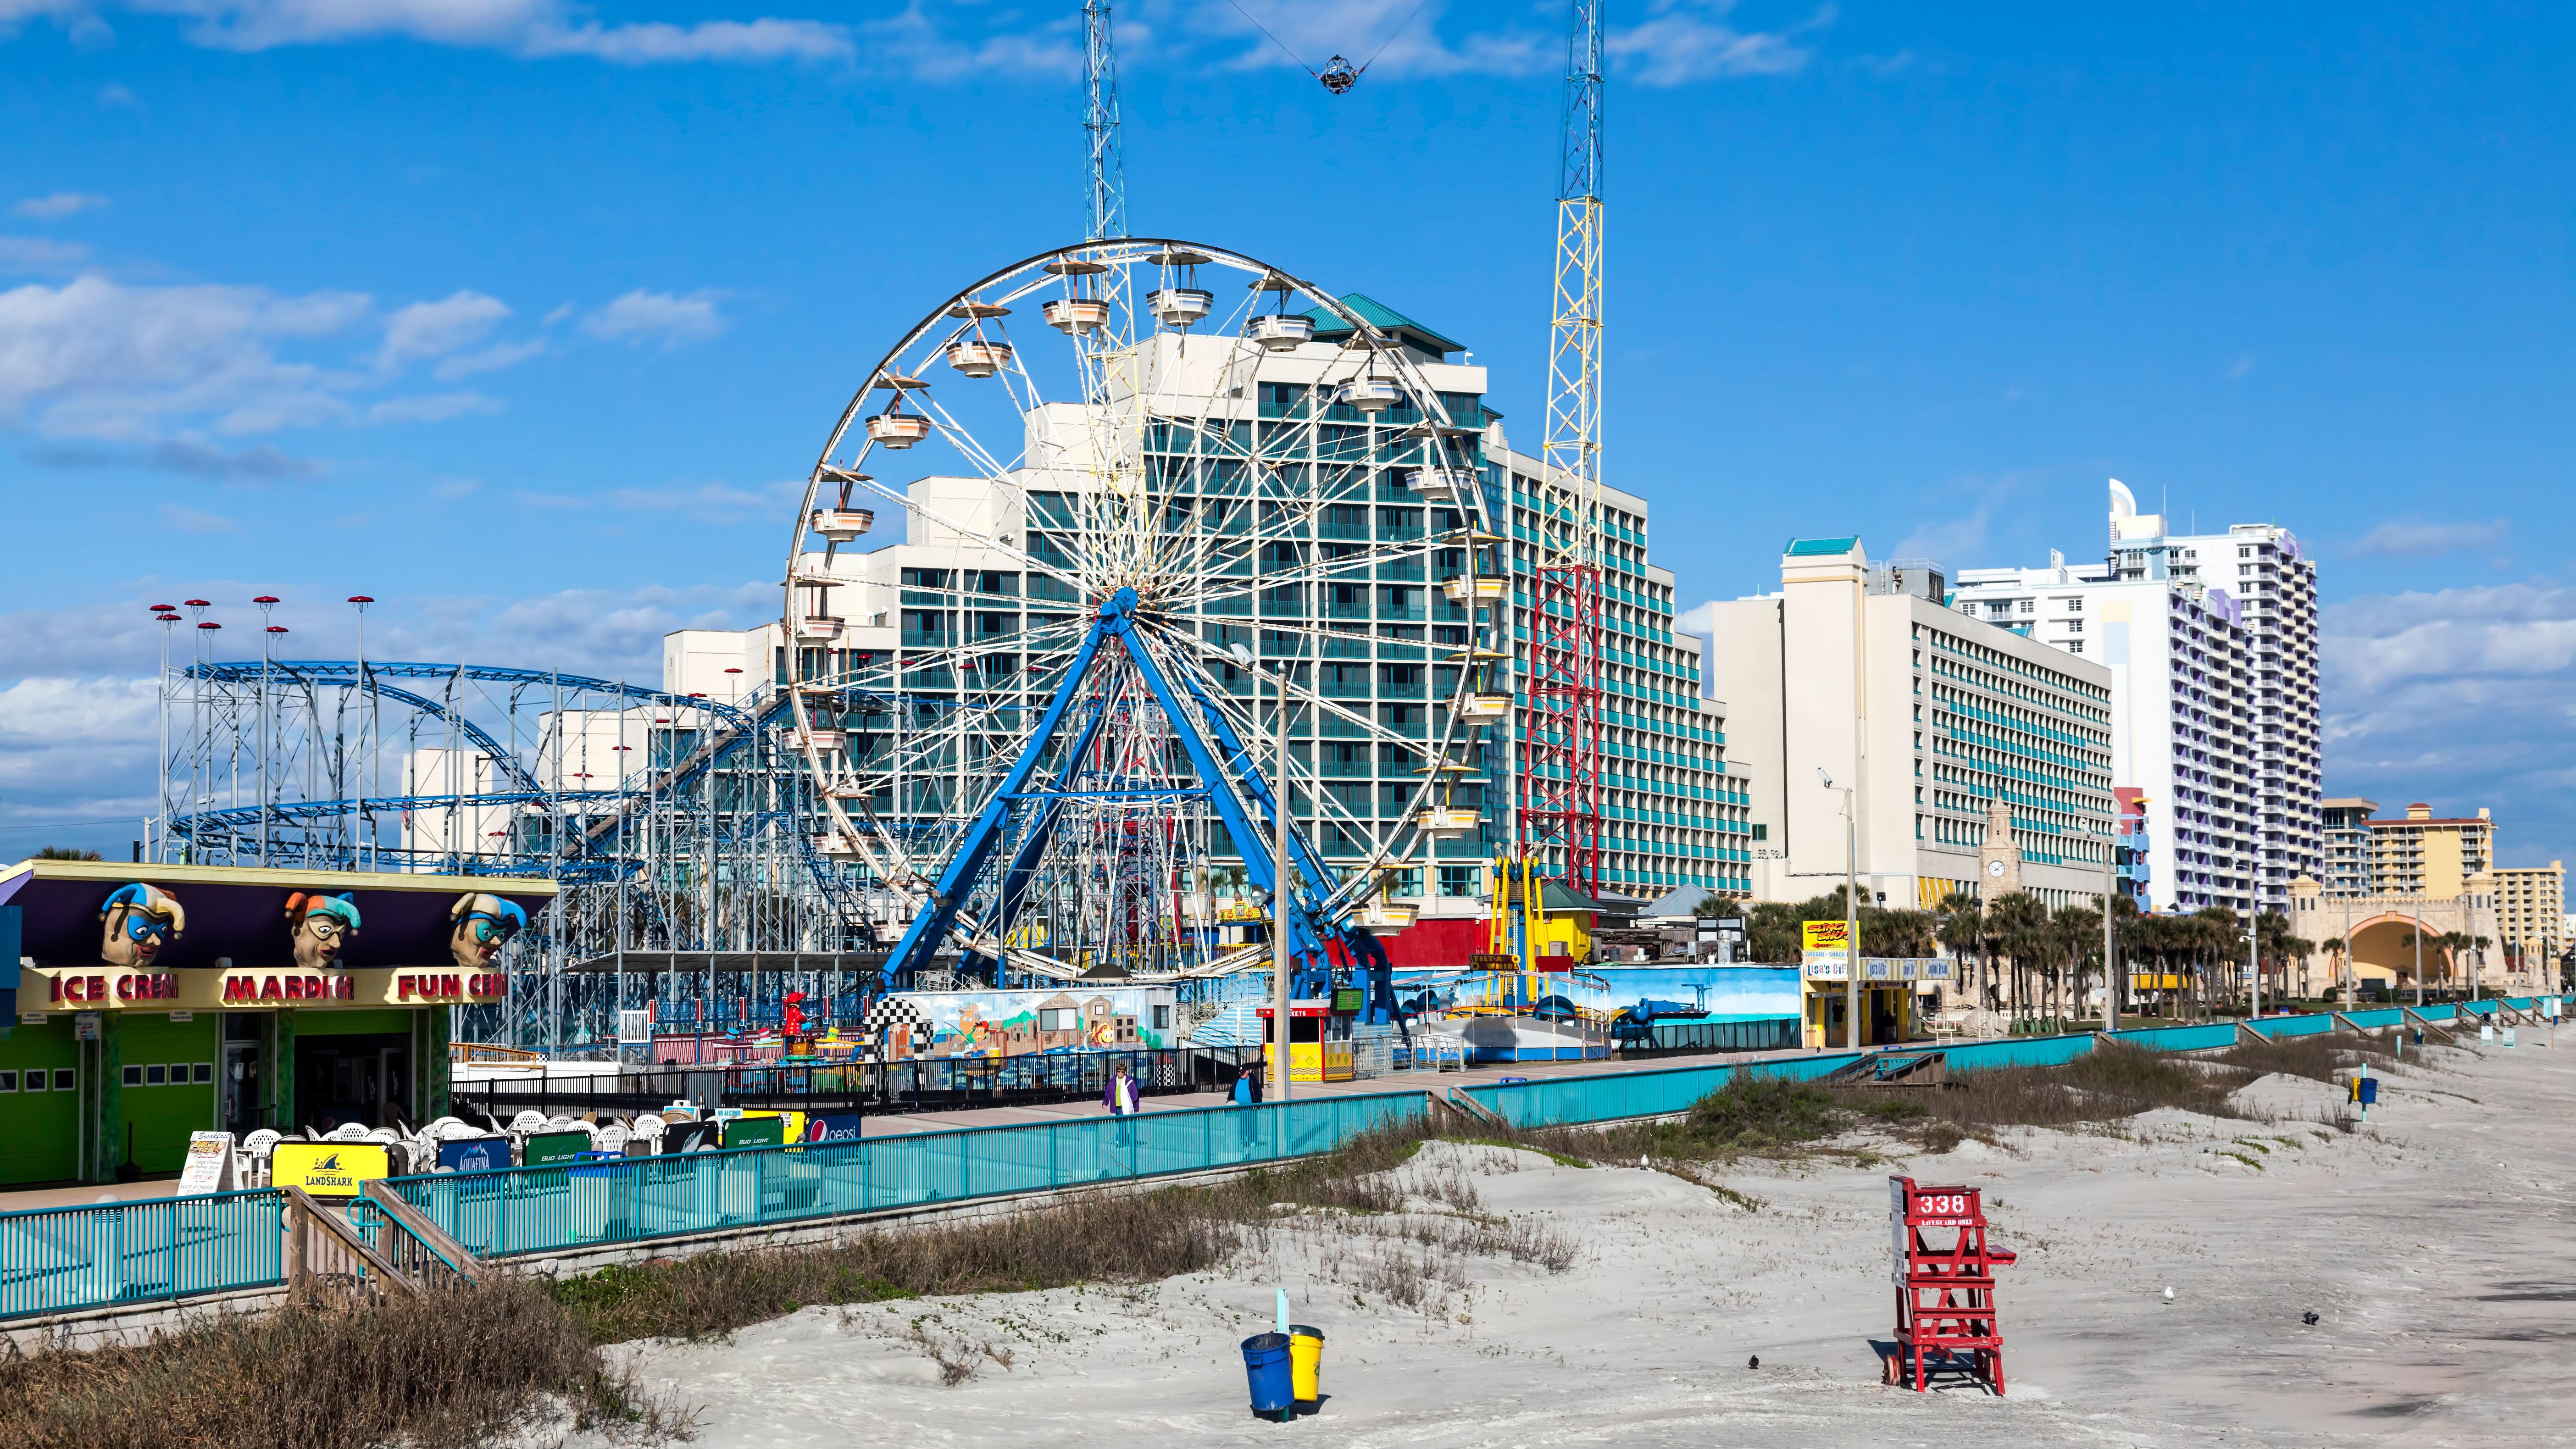 The Best Beach Hotels to Book in Daytona Beach, Florida